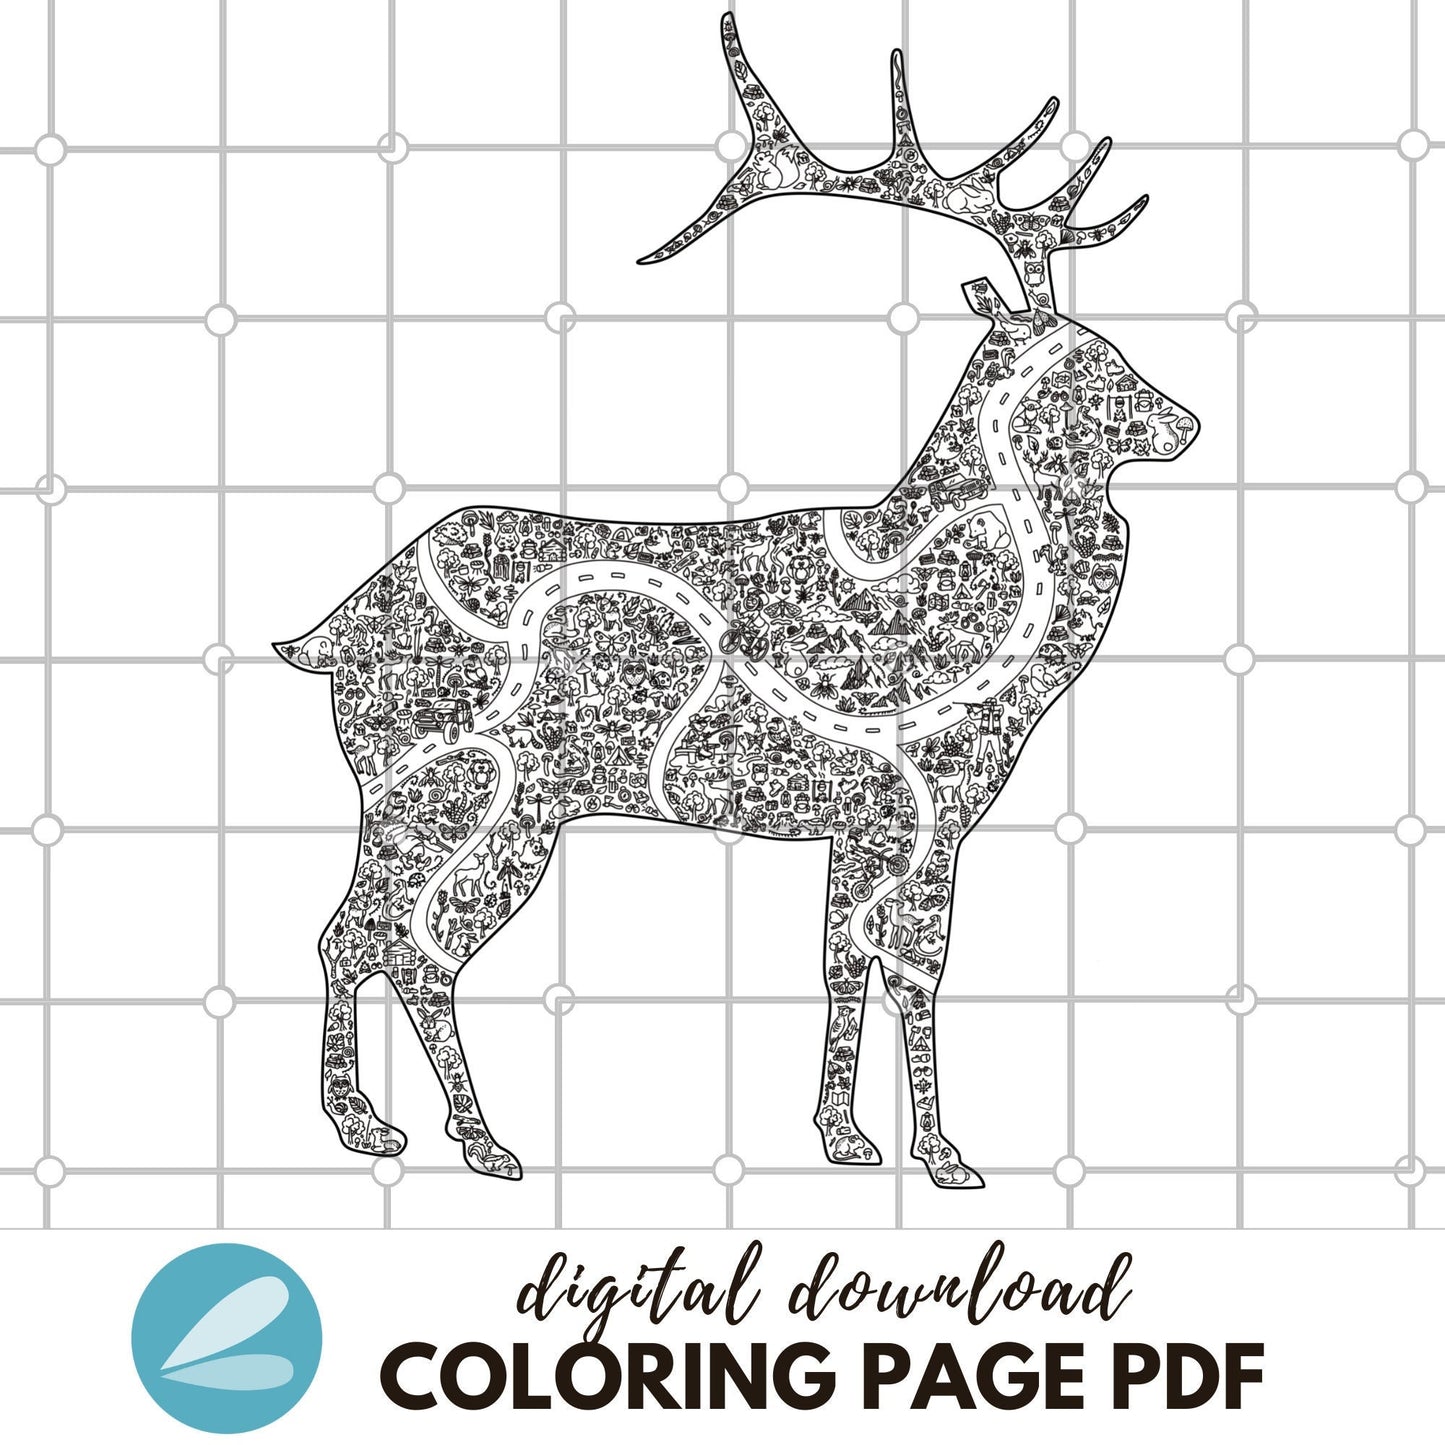 GIANT Reindeer Coloring Page - Holiday Reindeer PDF - Instant Download